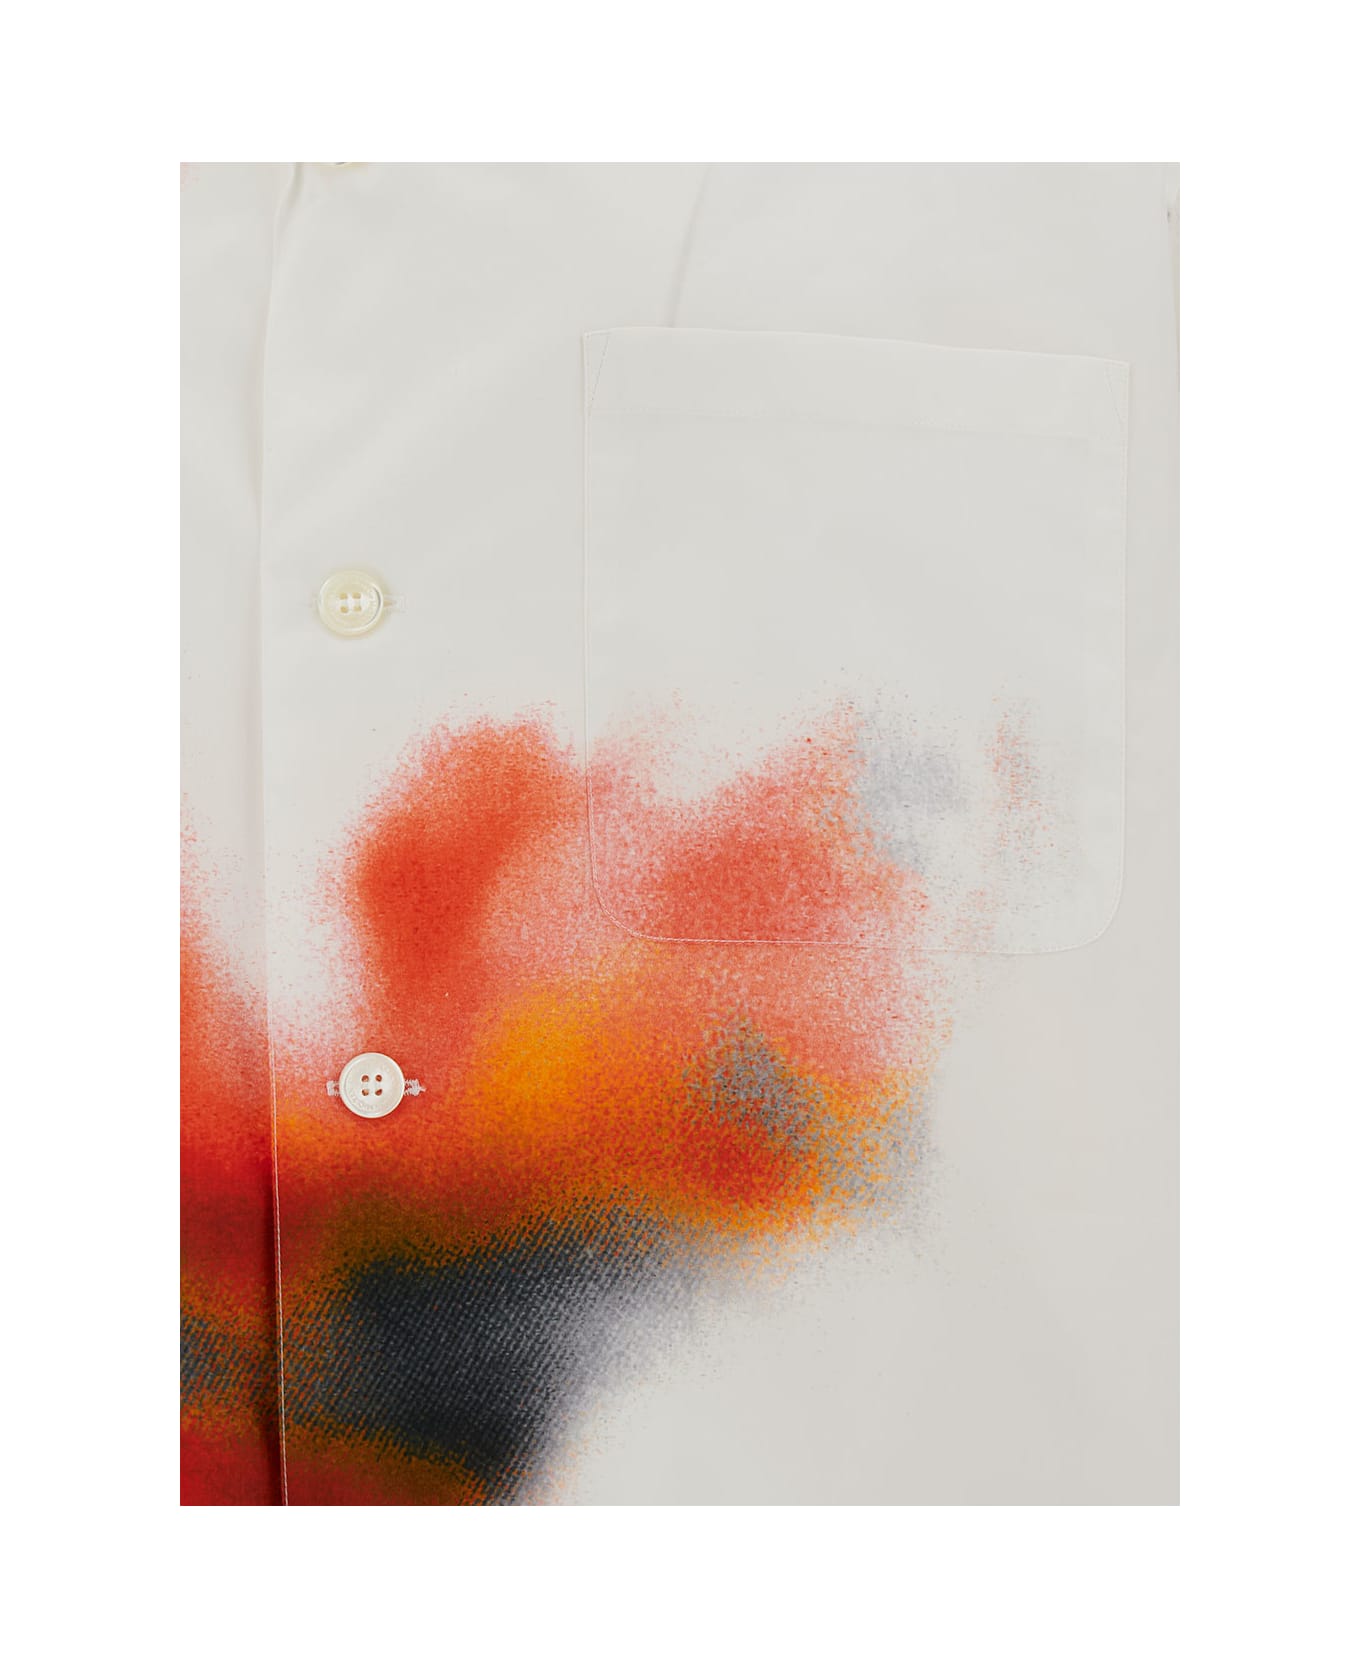 Alexander McQueen Bowling Shirt With Multicolor Print - Multicolor シャツ